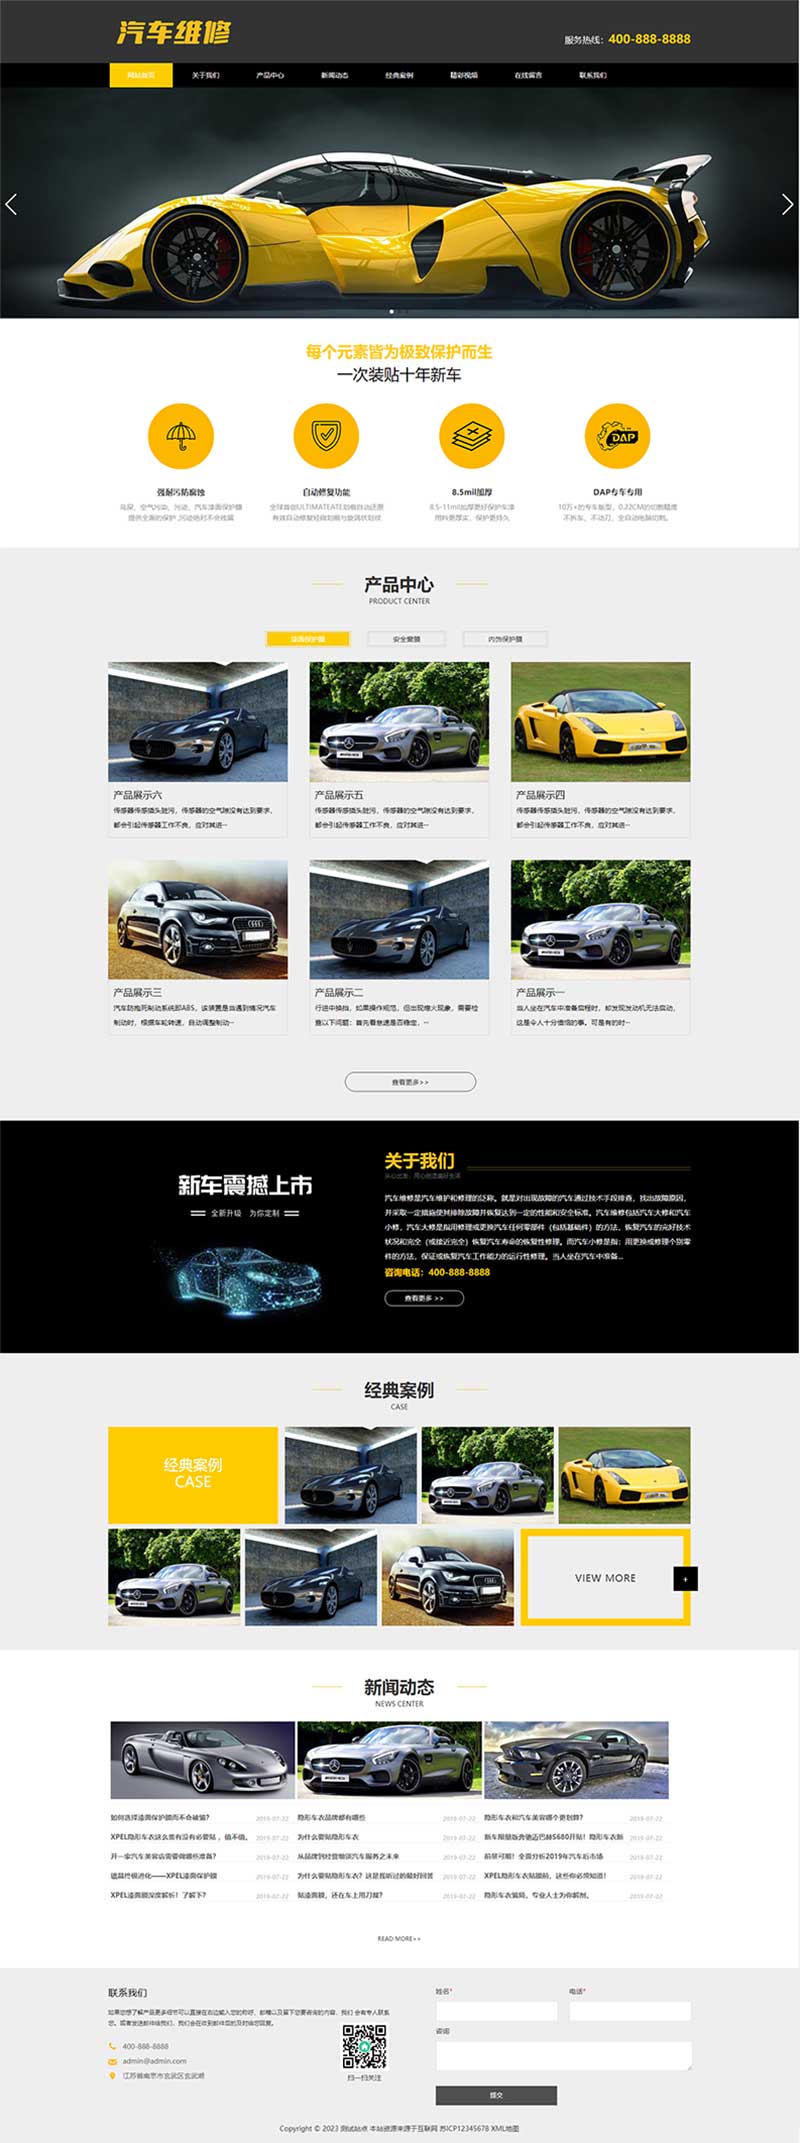 (PC+WAP)汽车美容维修工厂汽车4S店企业网站电脑端模板展示图片